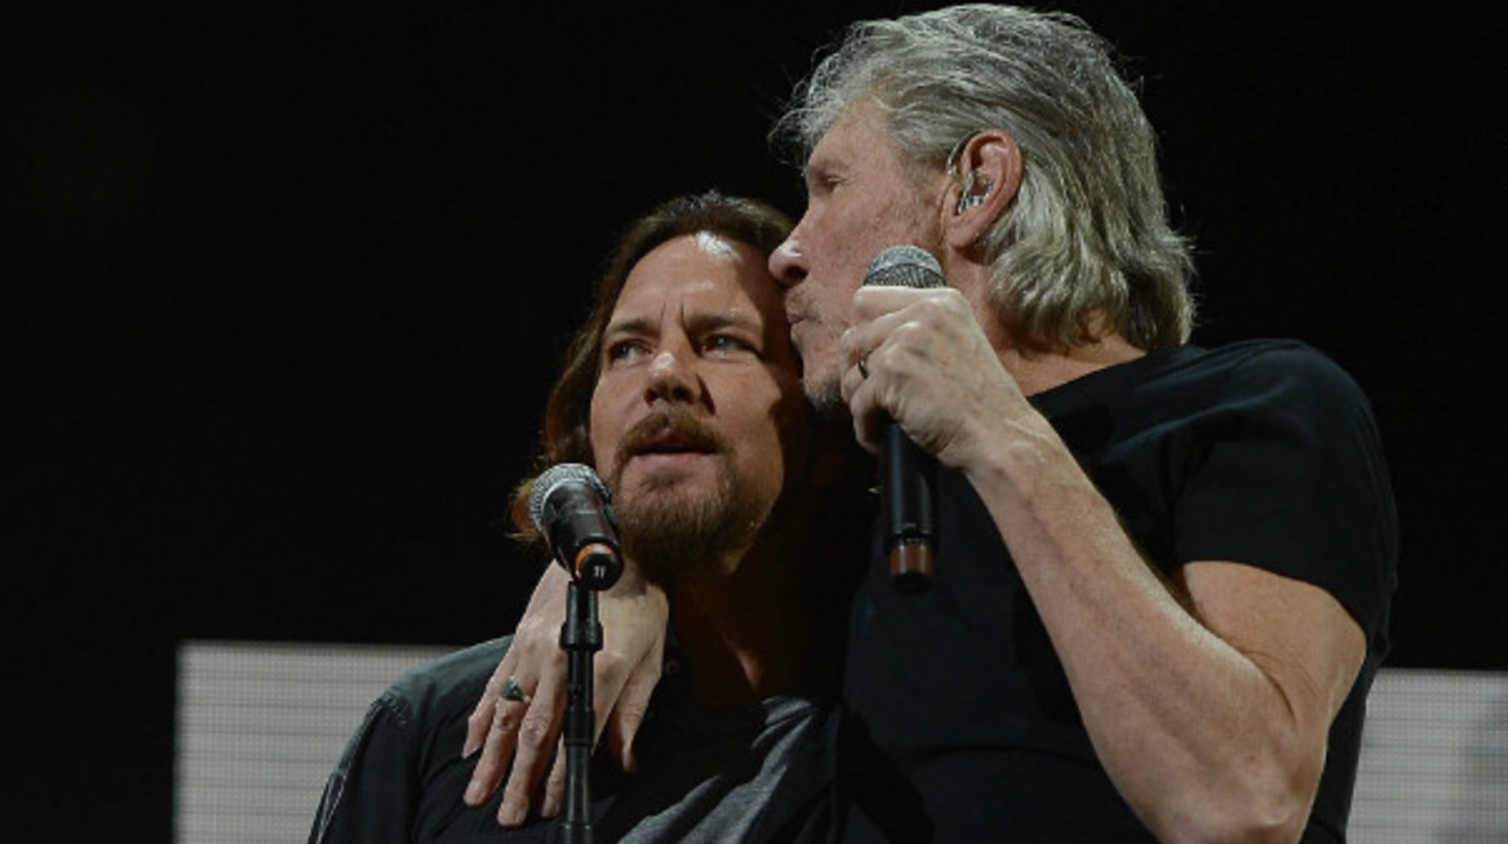 Eddie Vedder divide palco com Roger Waters para cantar Pink Floyd; assista